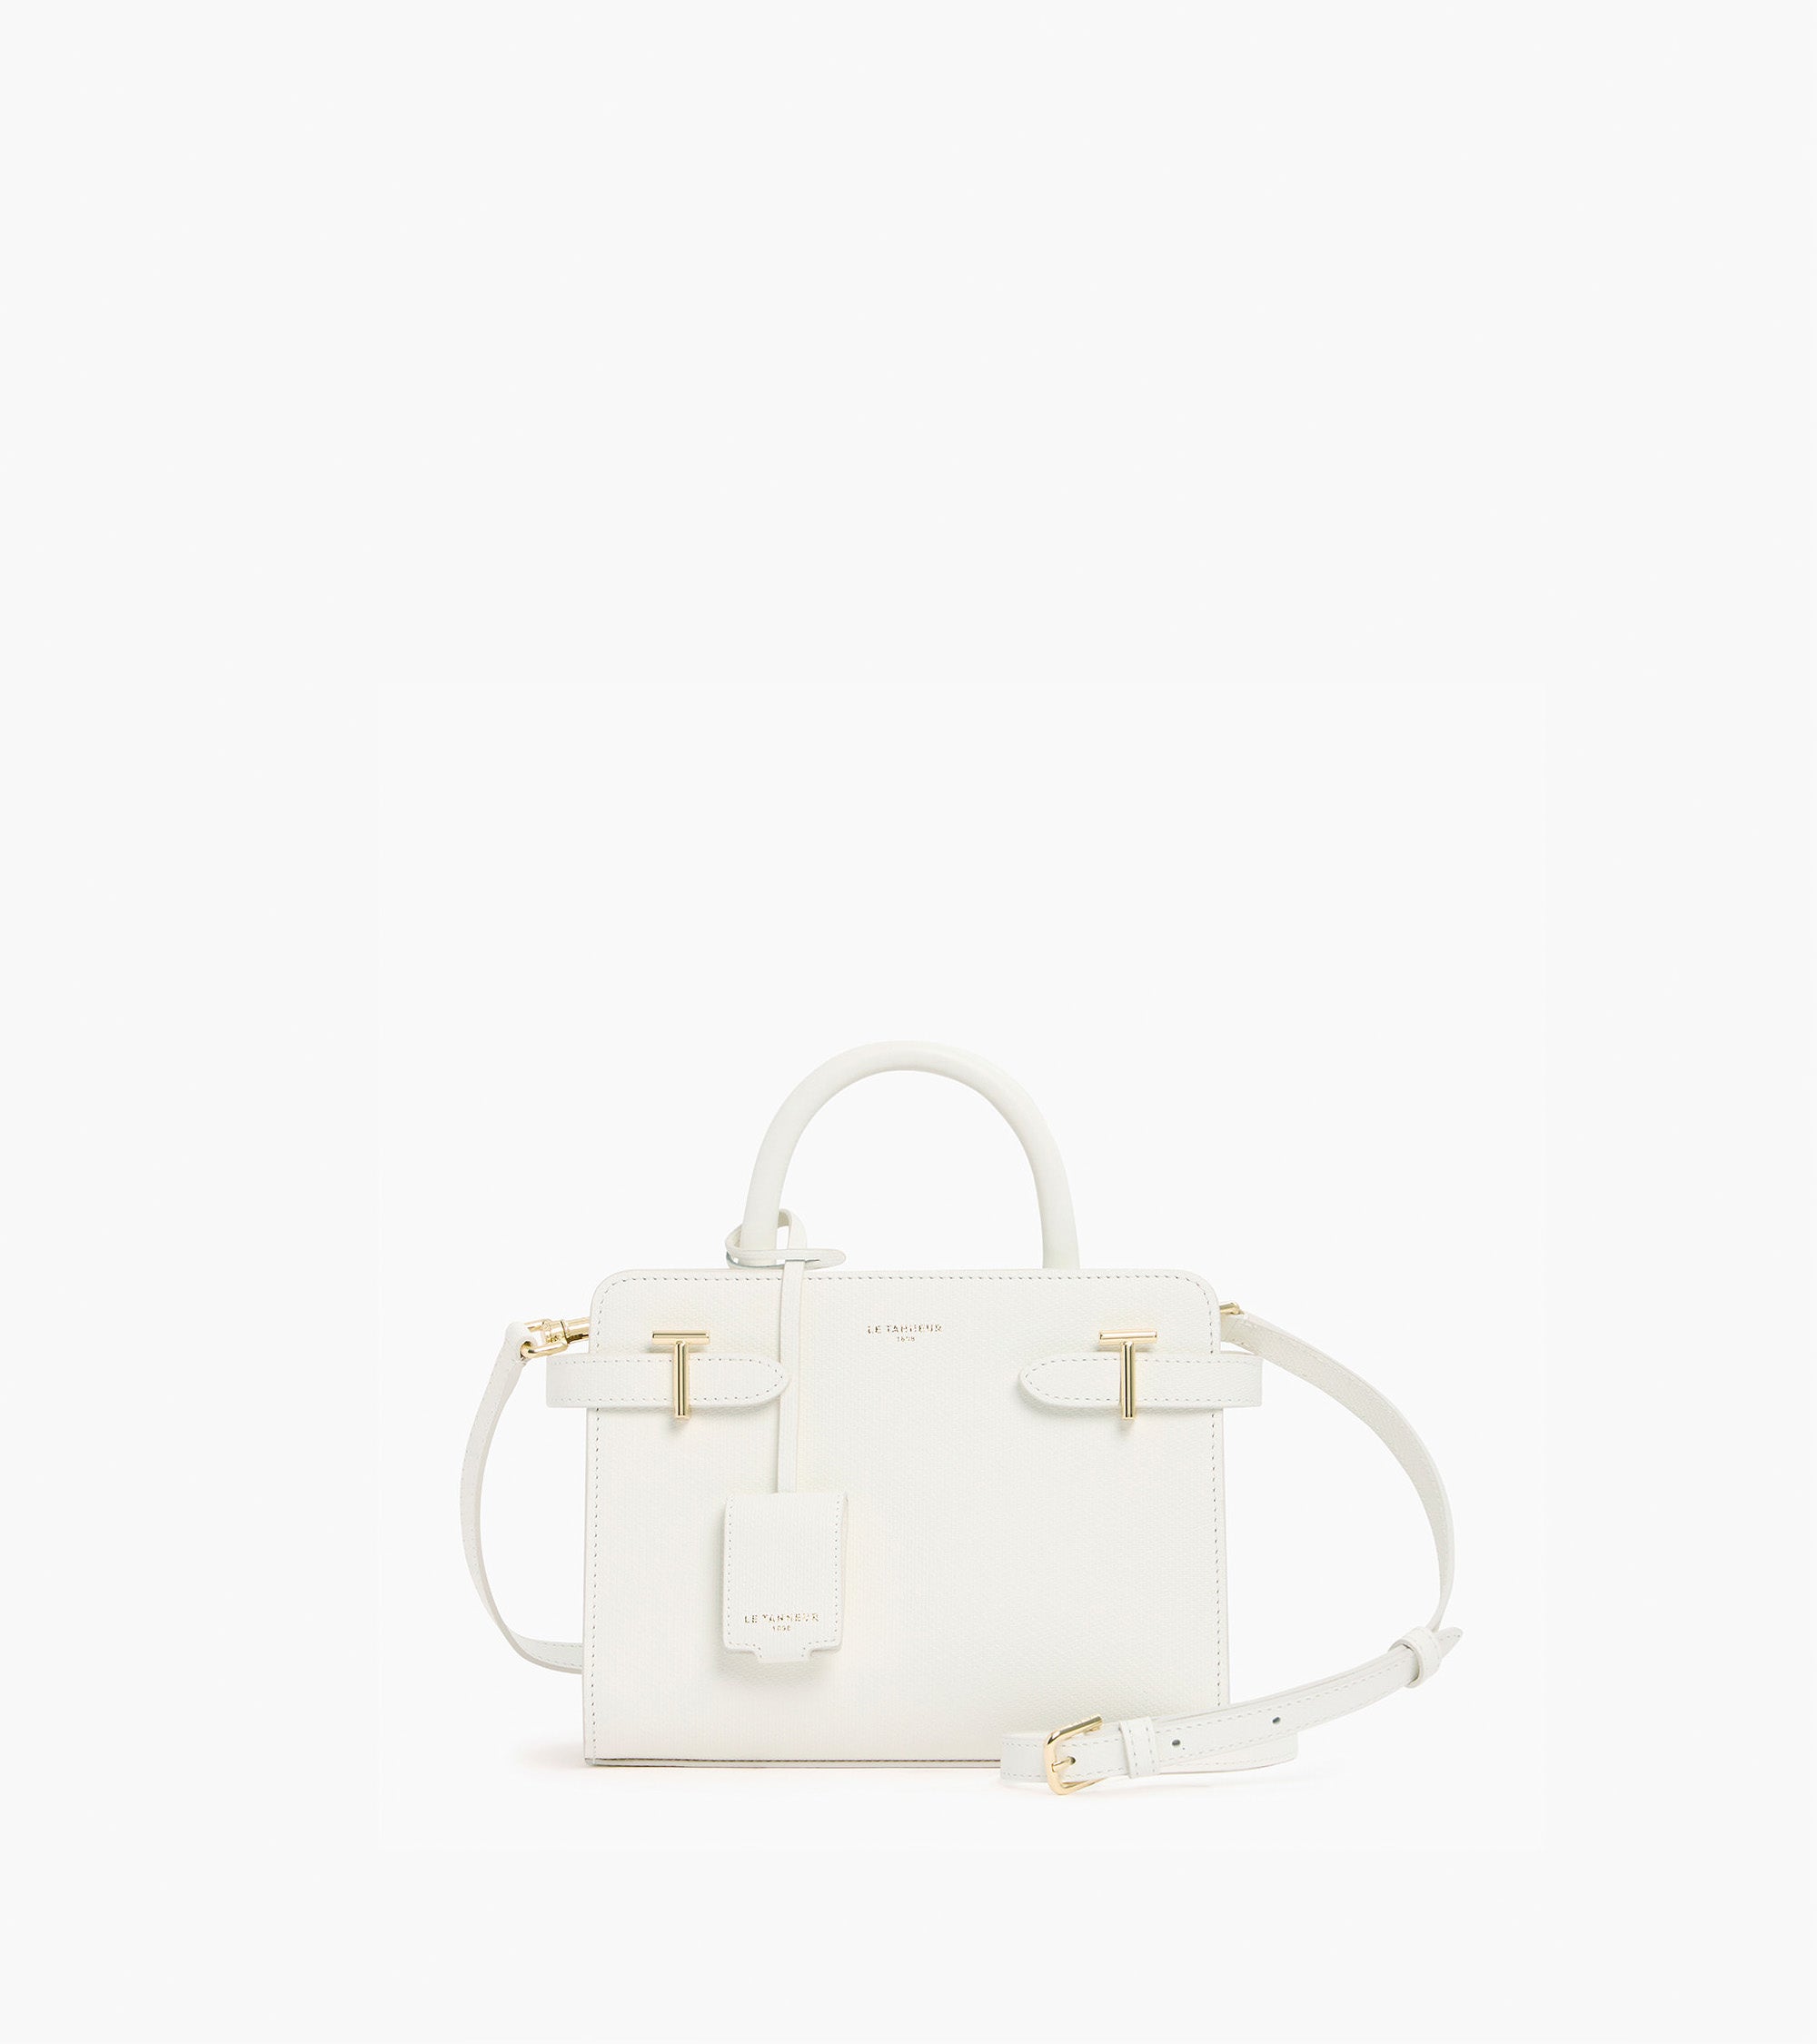 Emilie small handbag in monogrammed leather